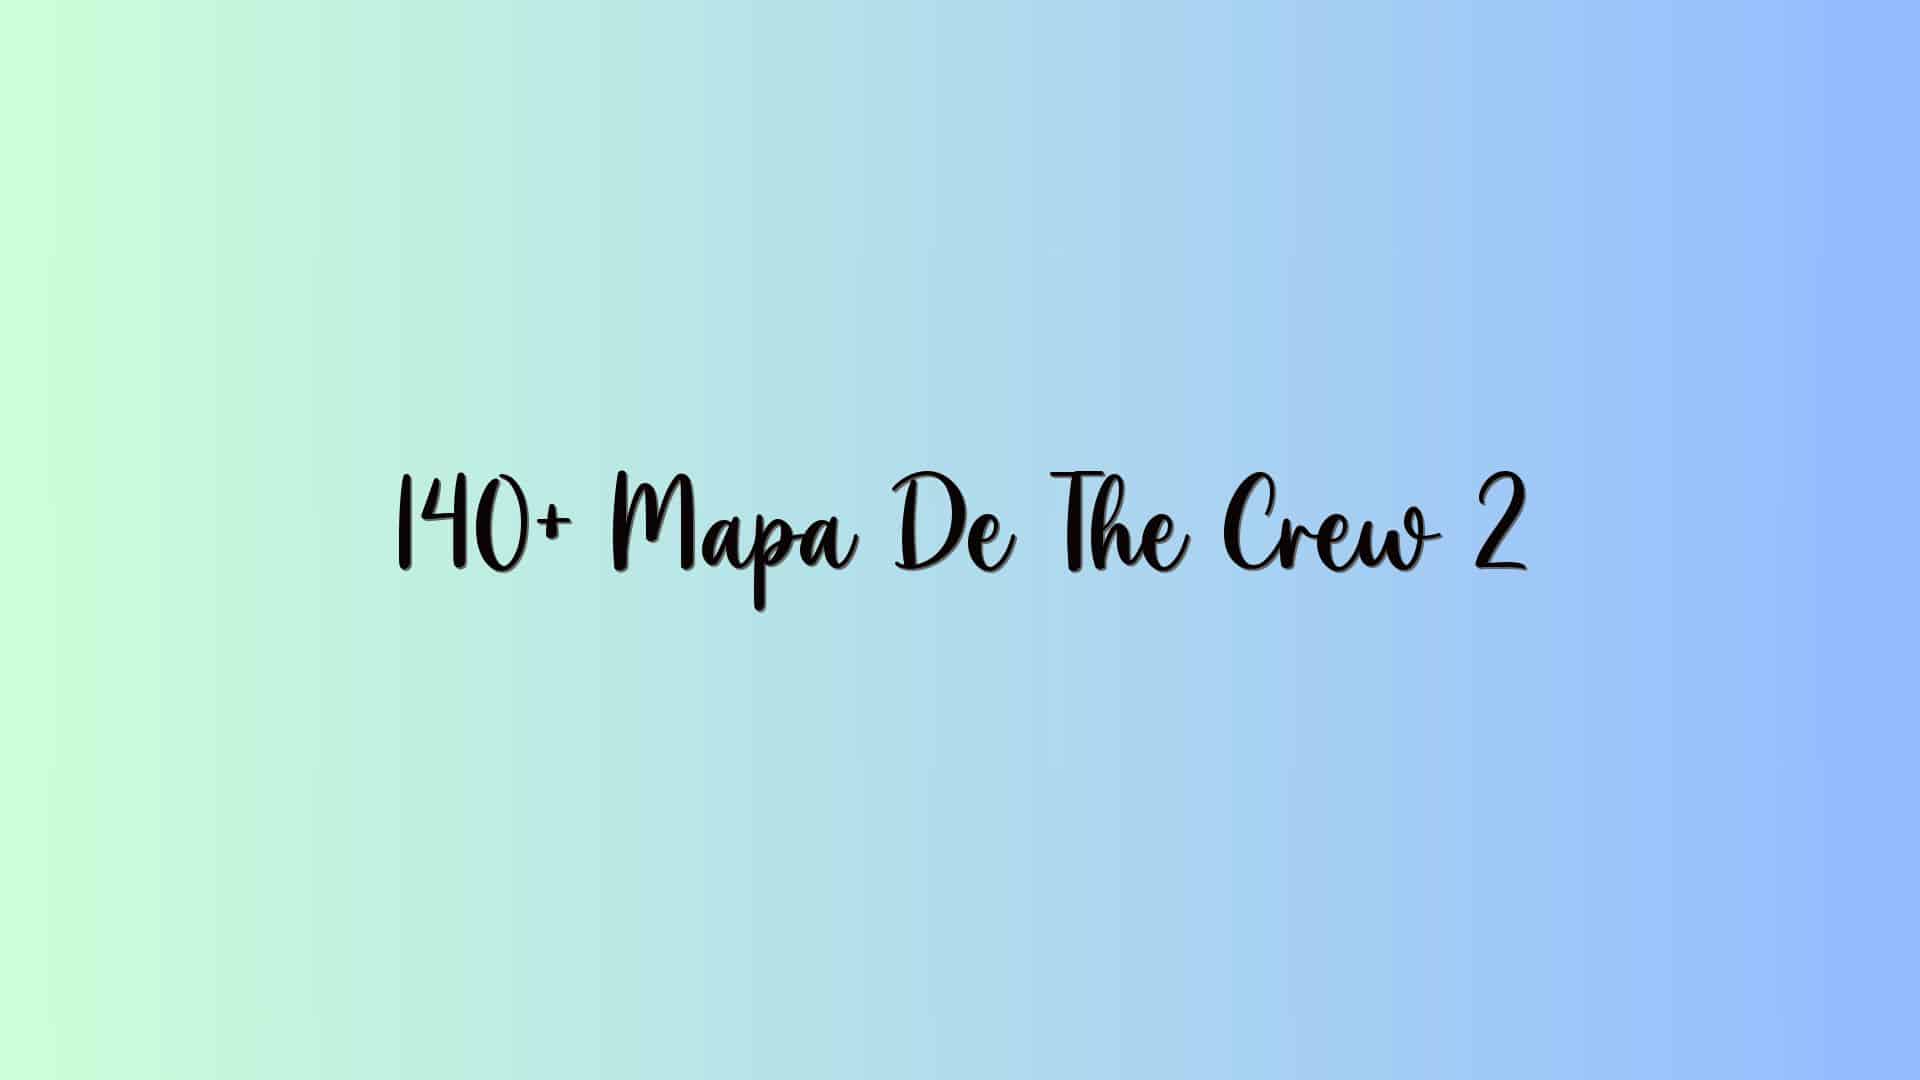 140+ Mapa De The Crew 2